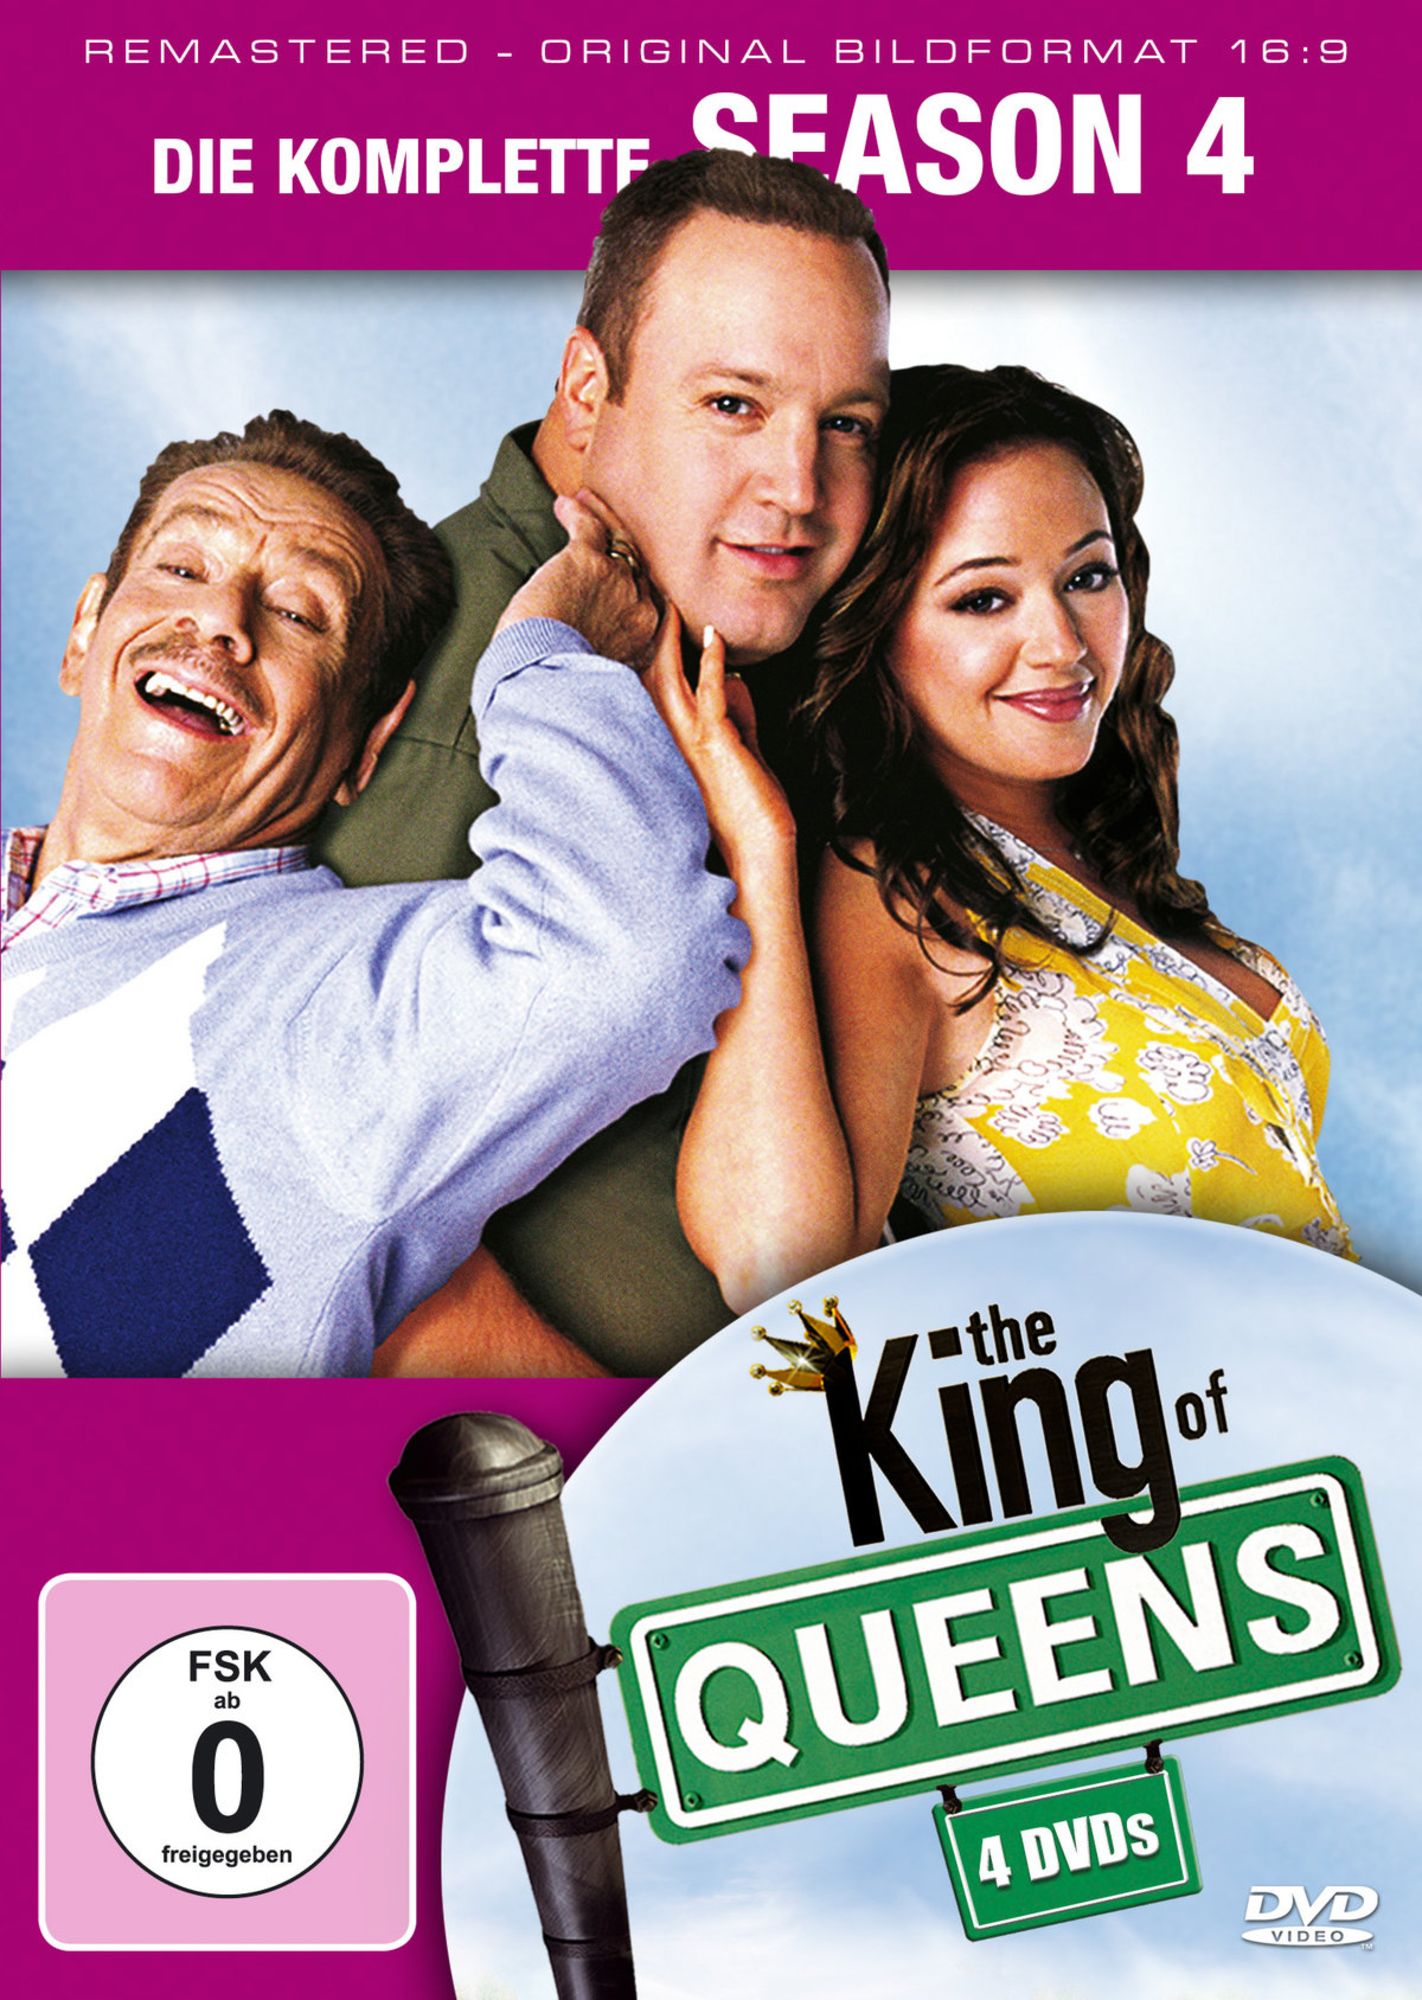 https://images.thalia.media/-/BF2000-2000/9d60fb4136f8430daa86ffe997dcd2ba/the-king-of-queens-staffel-4-dvd-kevin-james.jpeg